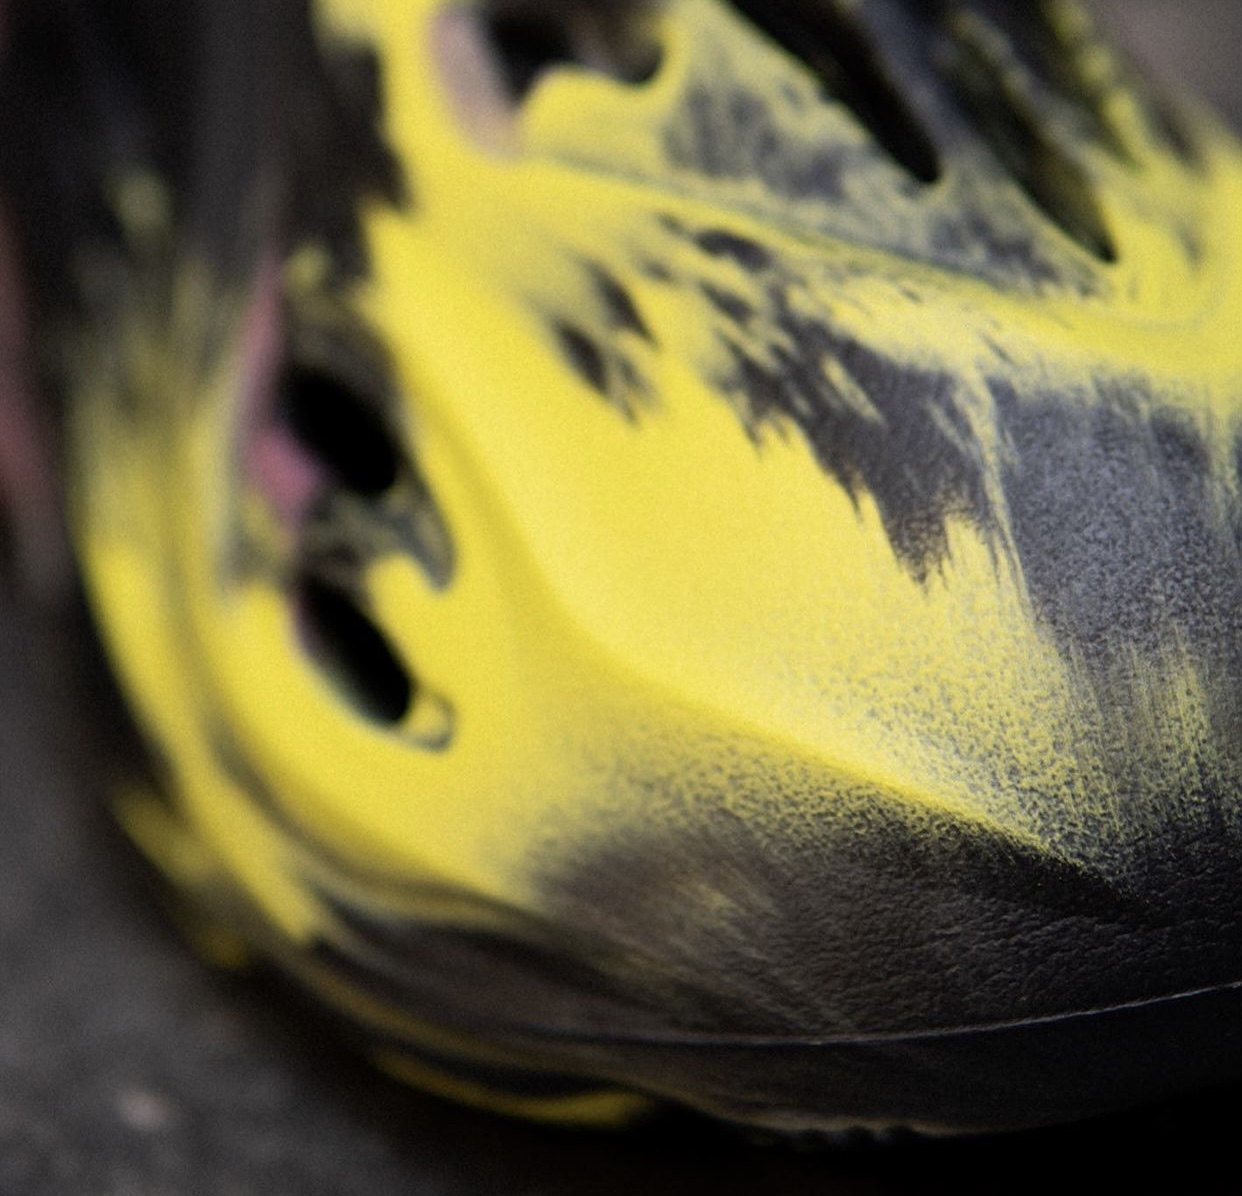 adidas Yeezy Foam Runner MX Carbon Release Date Price